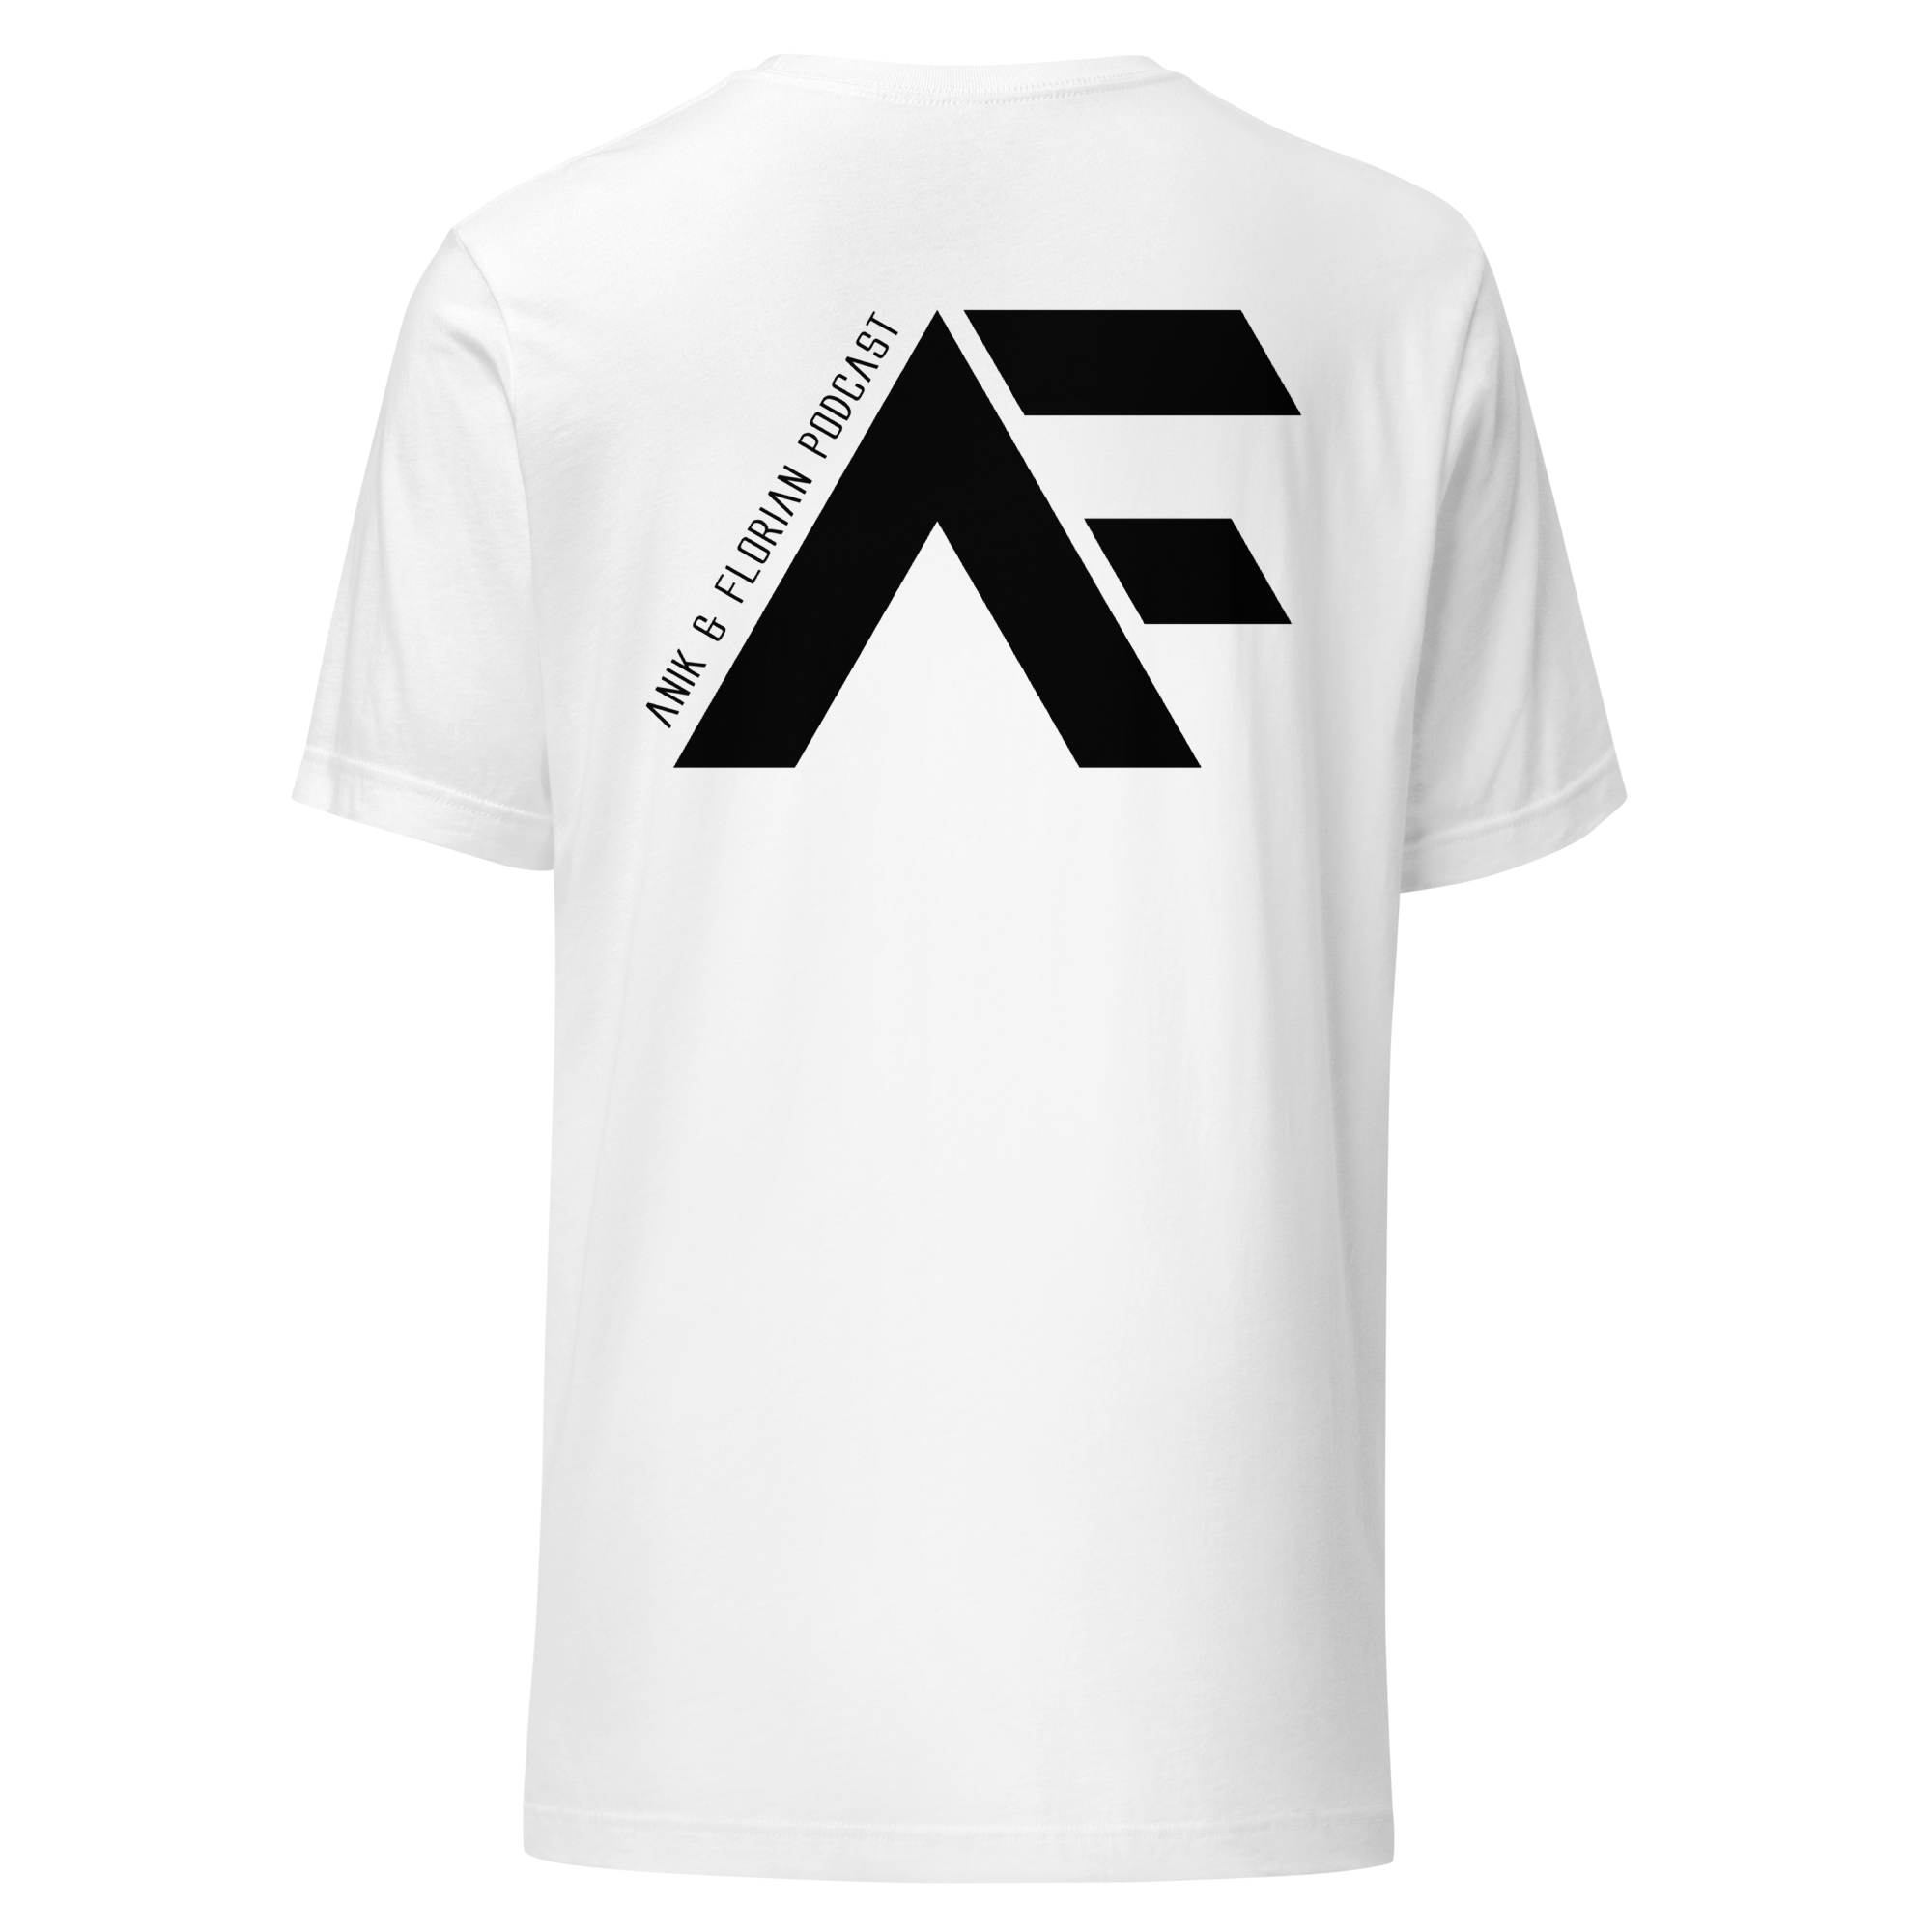 Jon Anik and Kenny Florian UFC Podcast Merch AF Monogram Logo Black Tshirt in White on Back for JonAnik.com